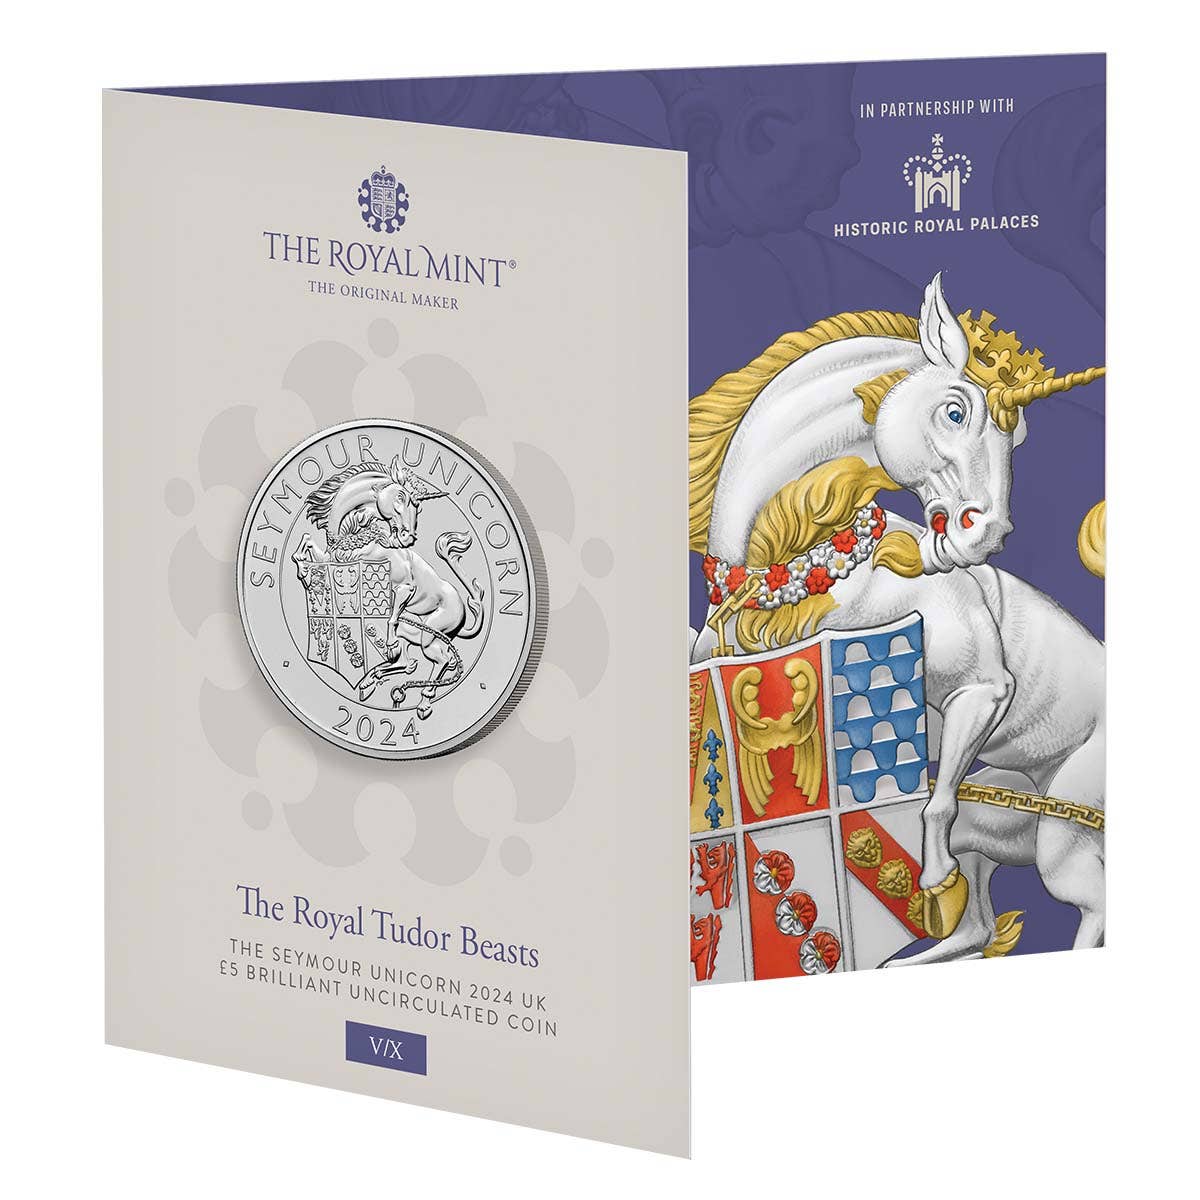 Royal Tudor Beasts The Seymour Unicorn 2024 £5 Brilliant Uncirculated Coin